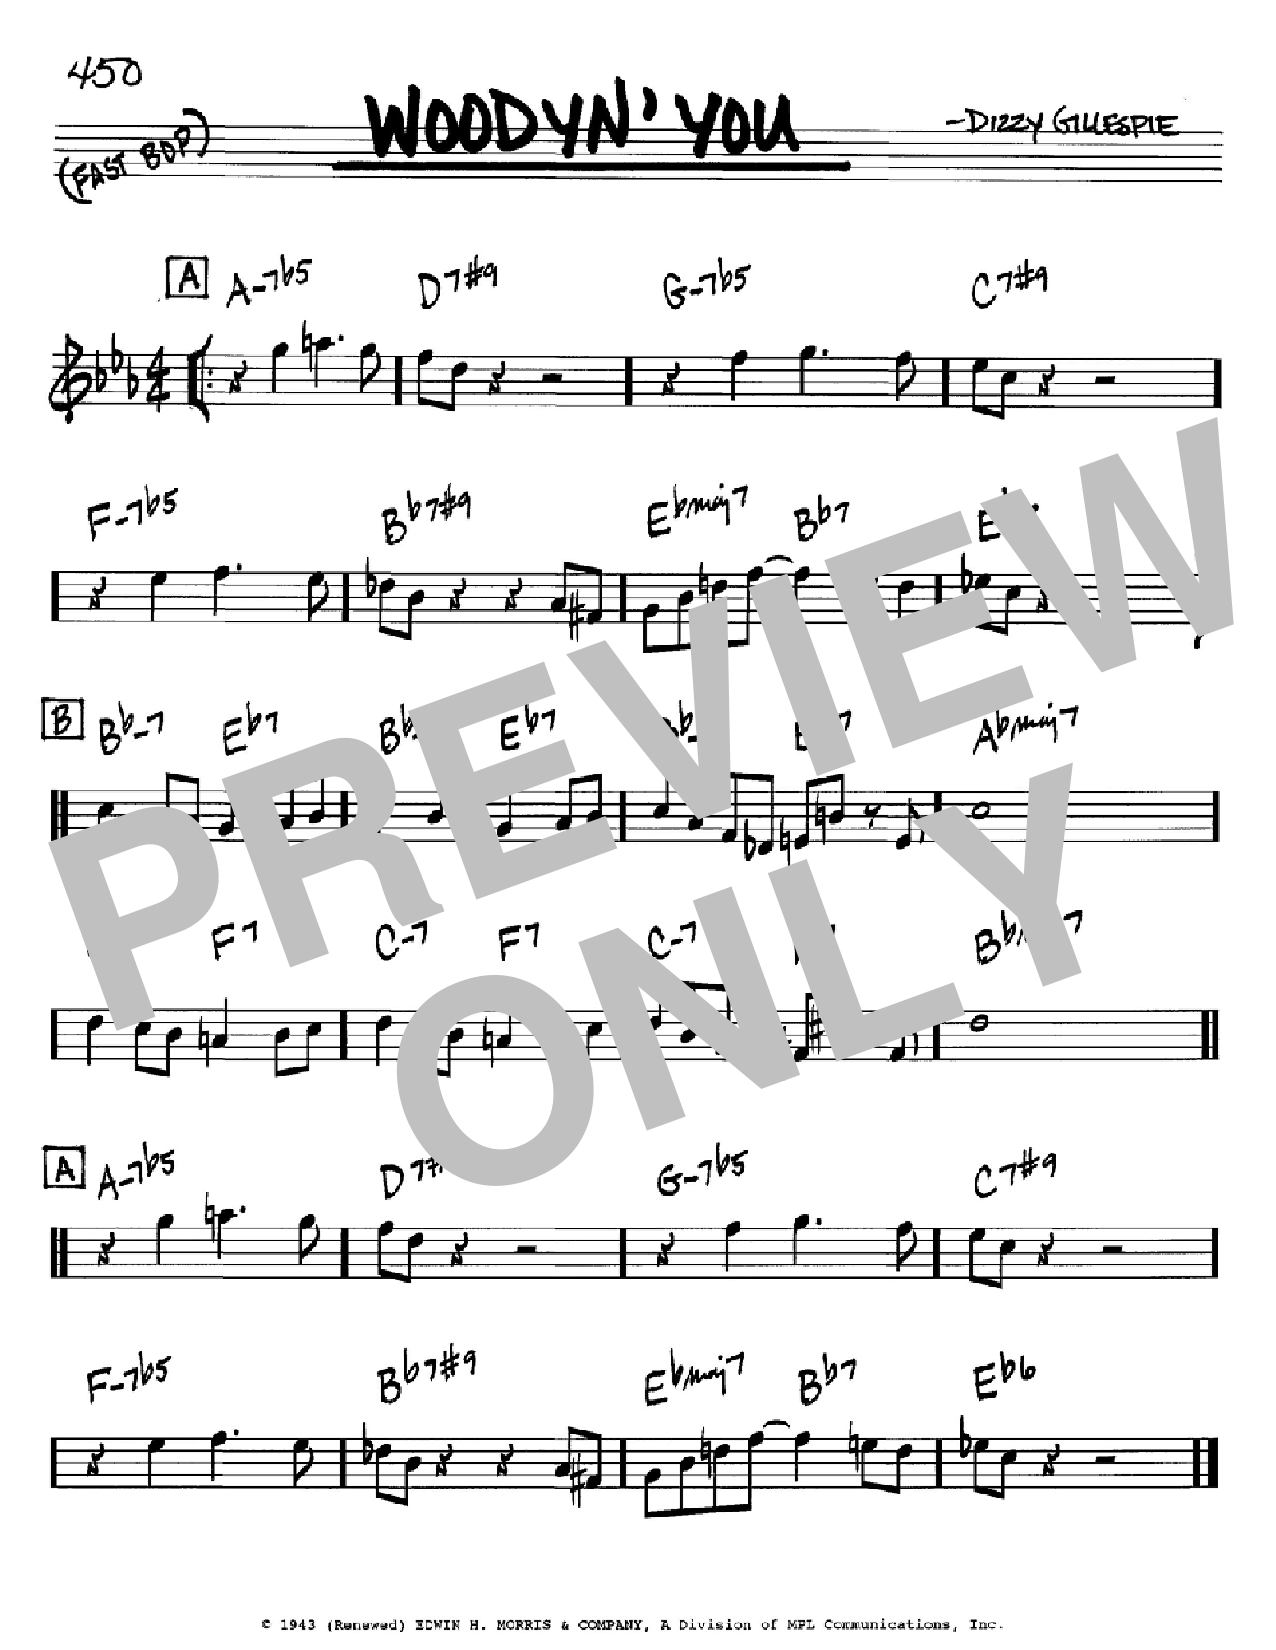 Download Dizzy Gillespie Woodyn' You Sheet Music